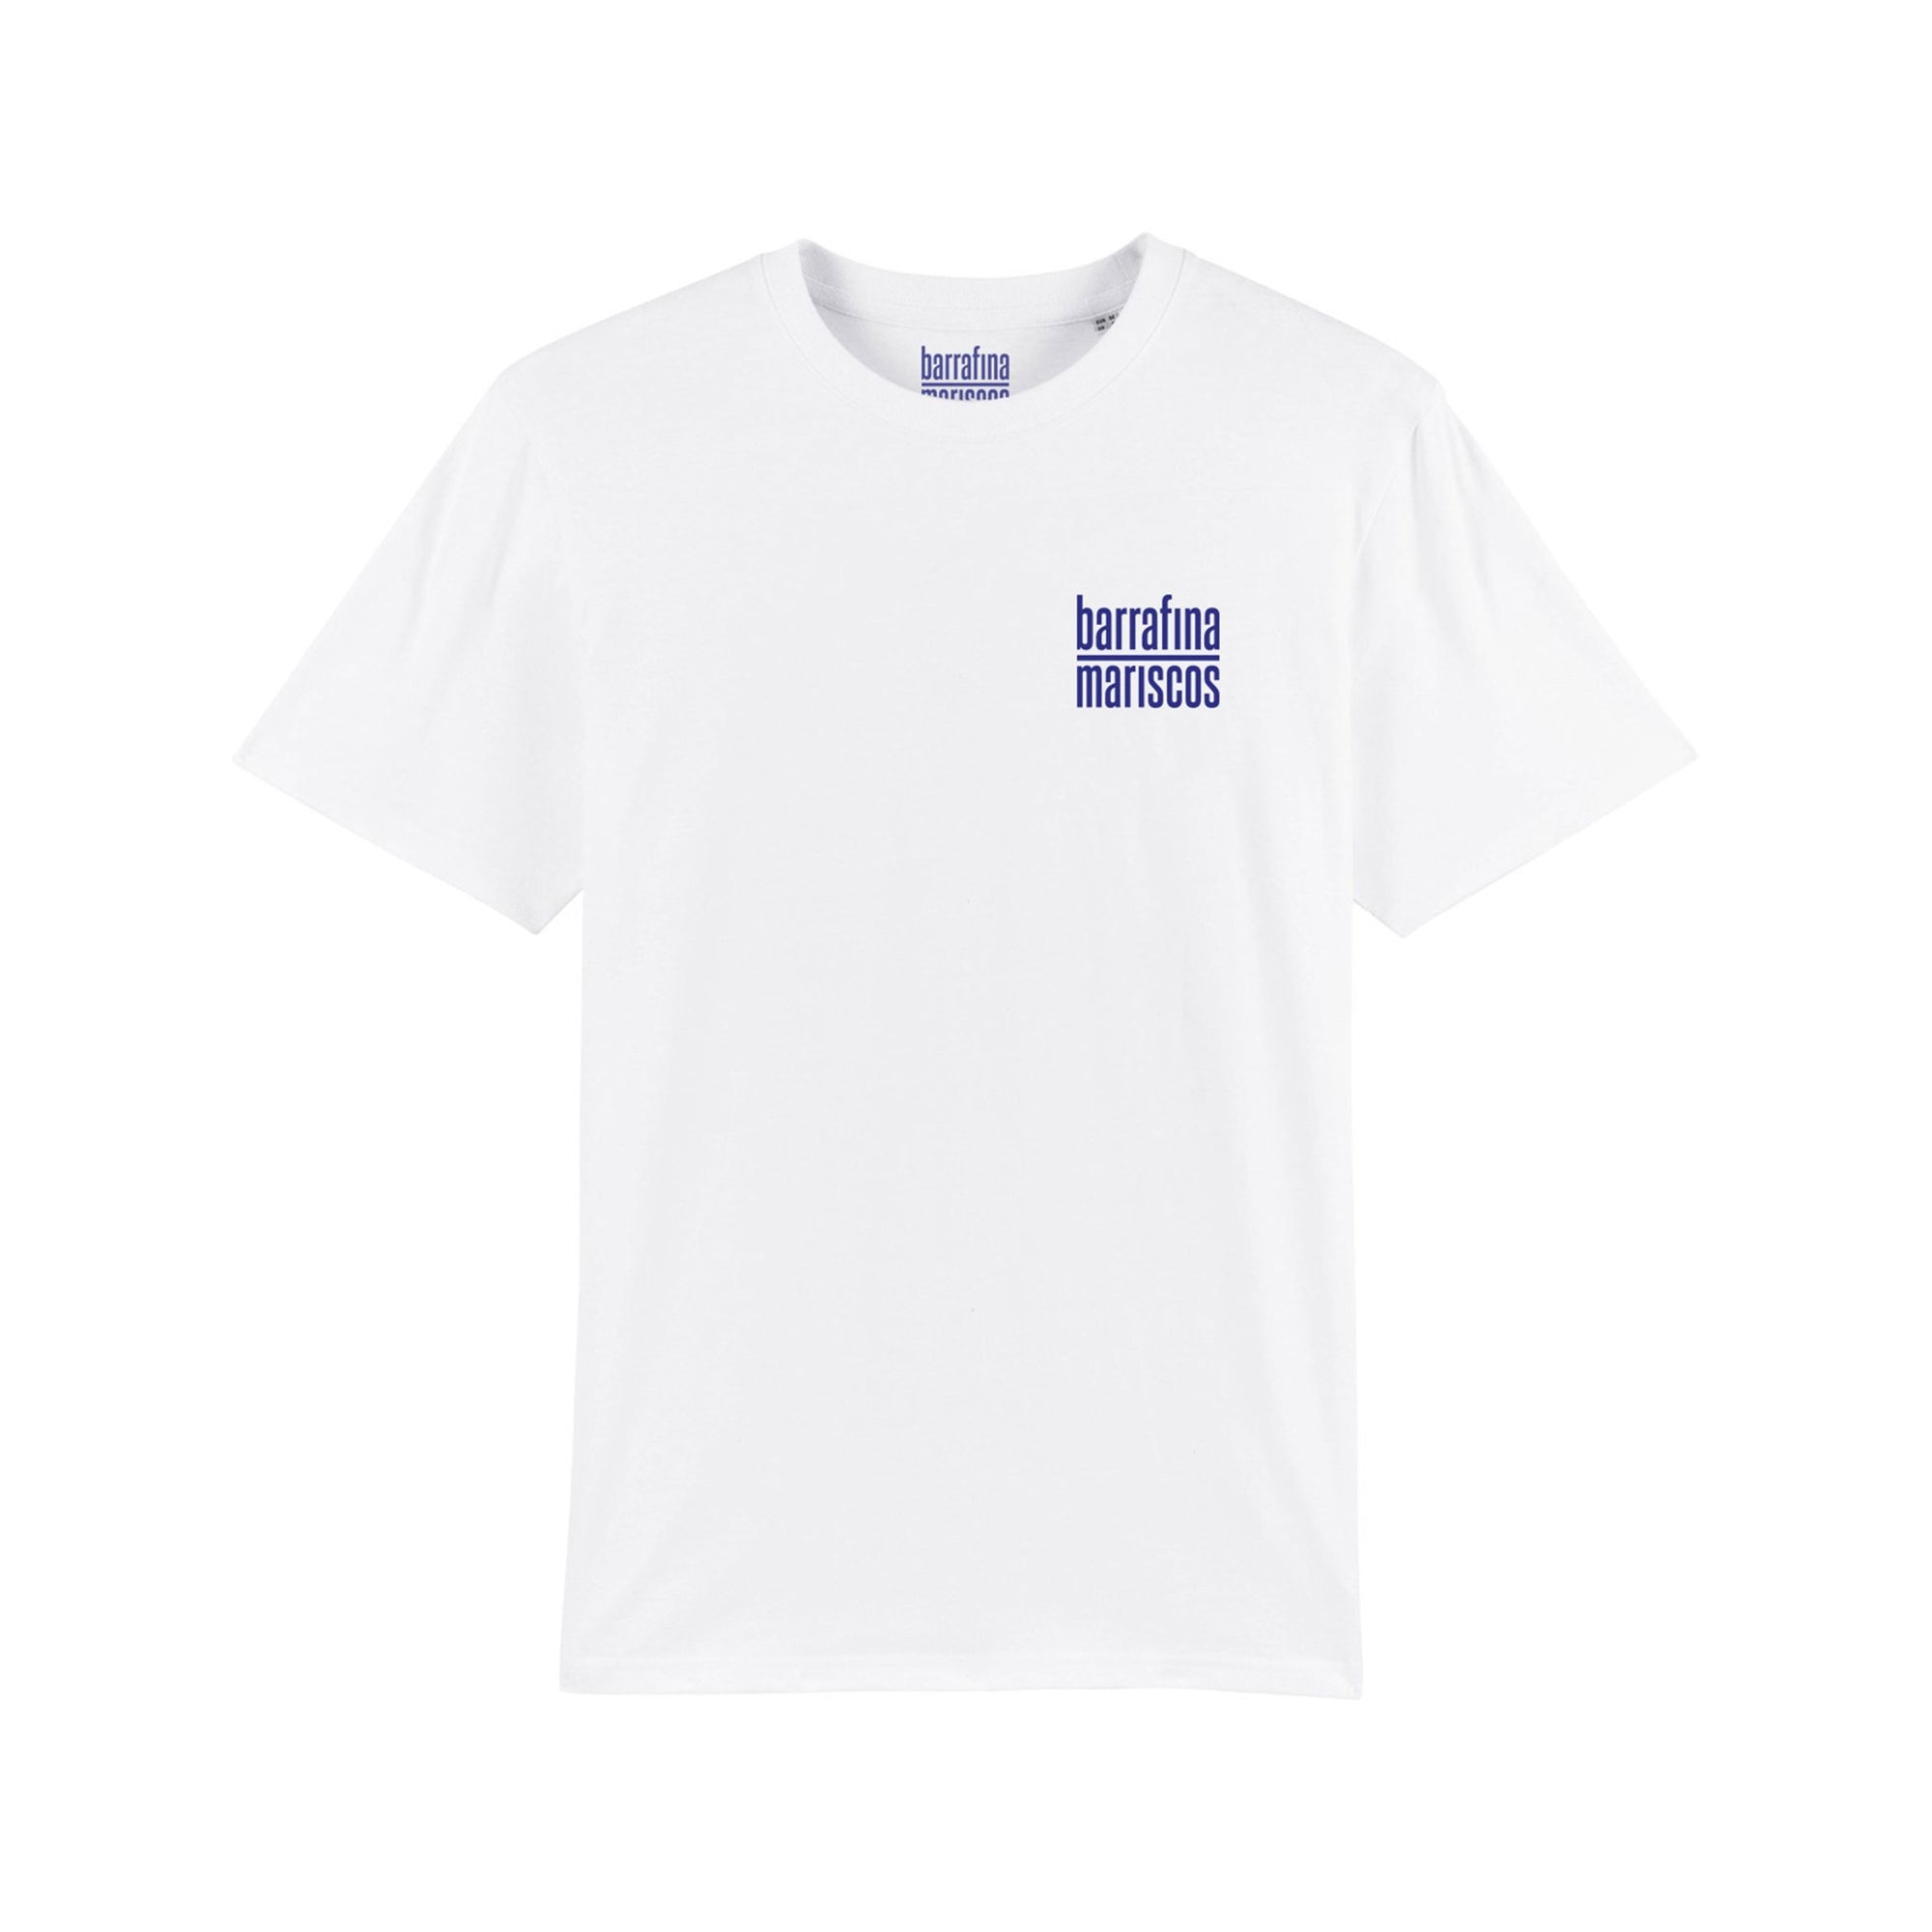 UJ Select x Barrafina Mariscos T-shirt – With Prawn